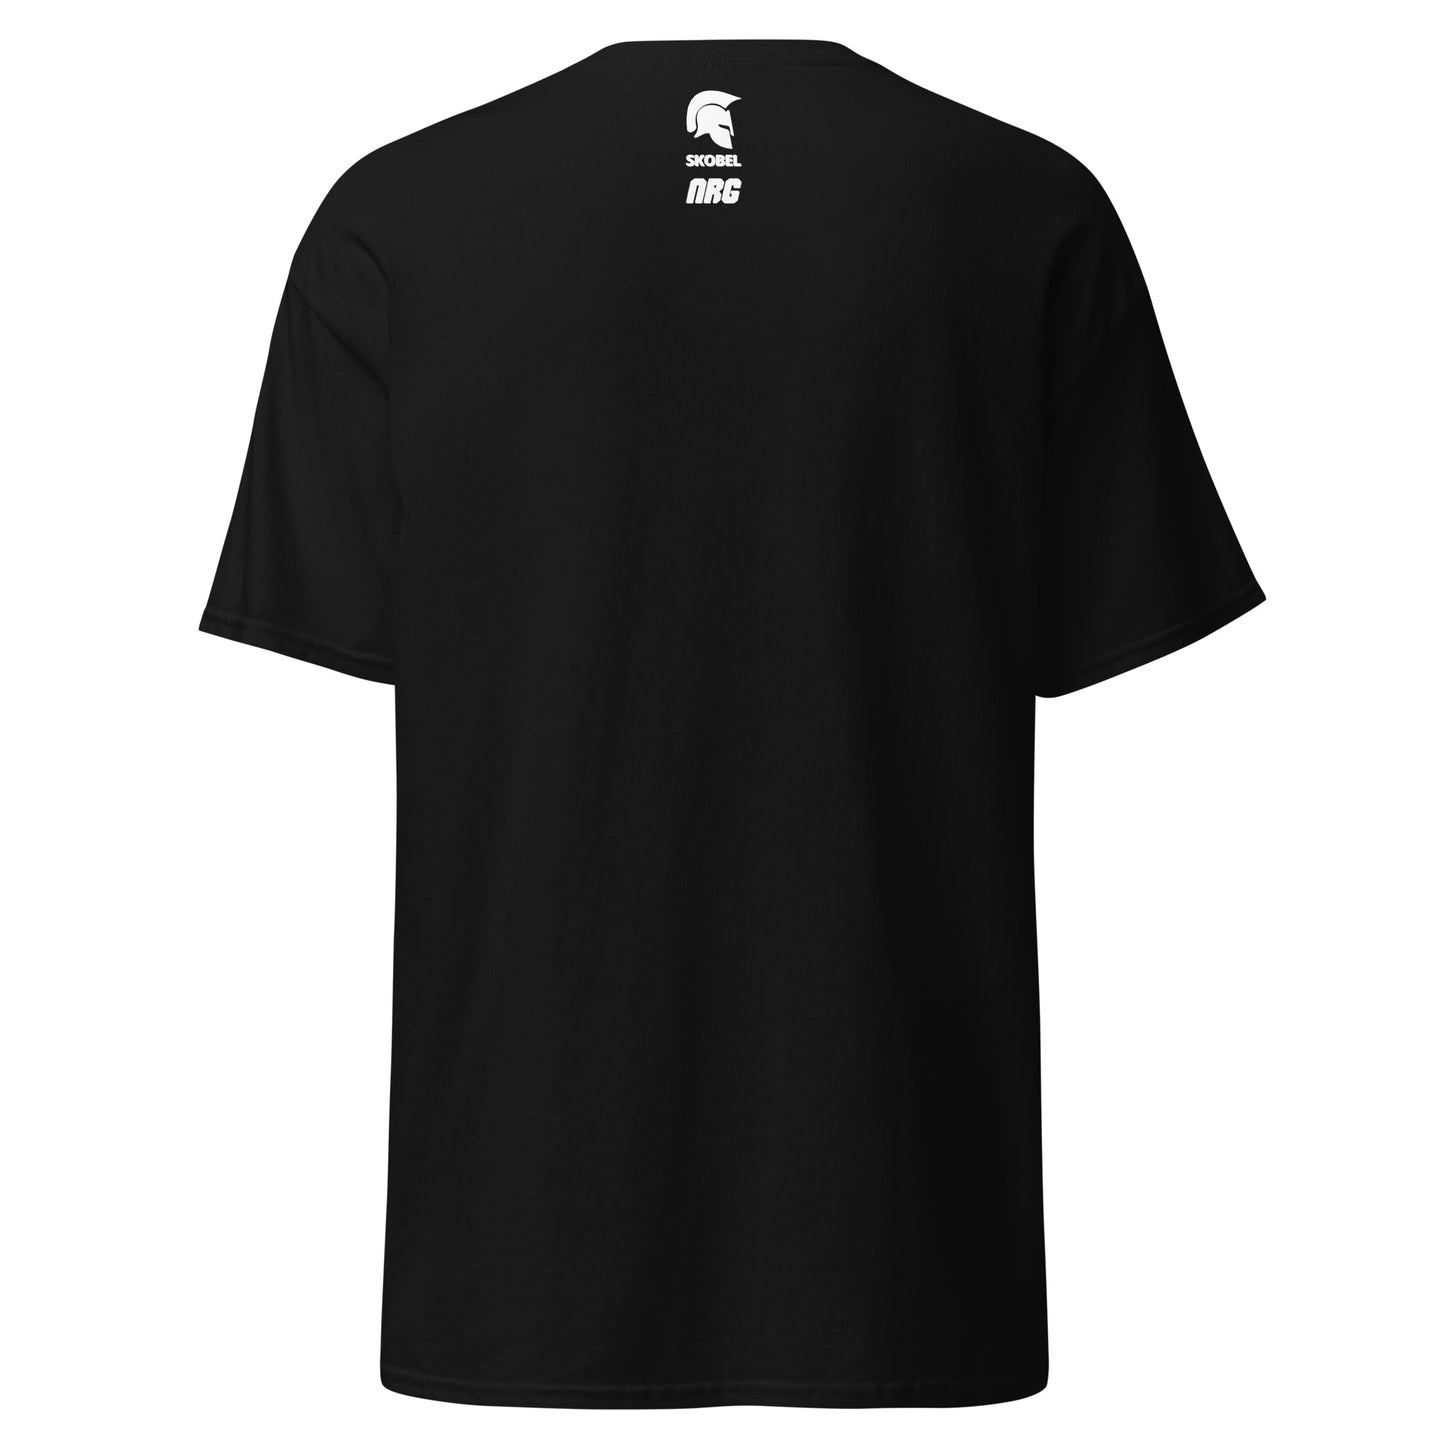 NRG Men's Classic T-Shirt | Design "Unlimited NRG"